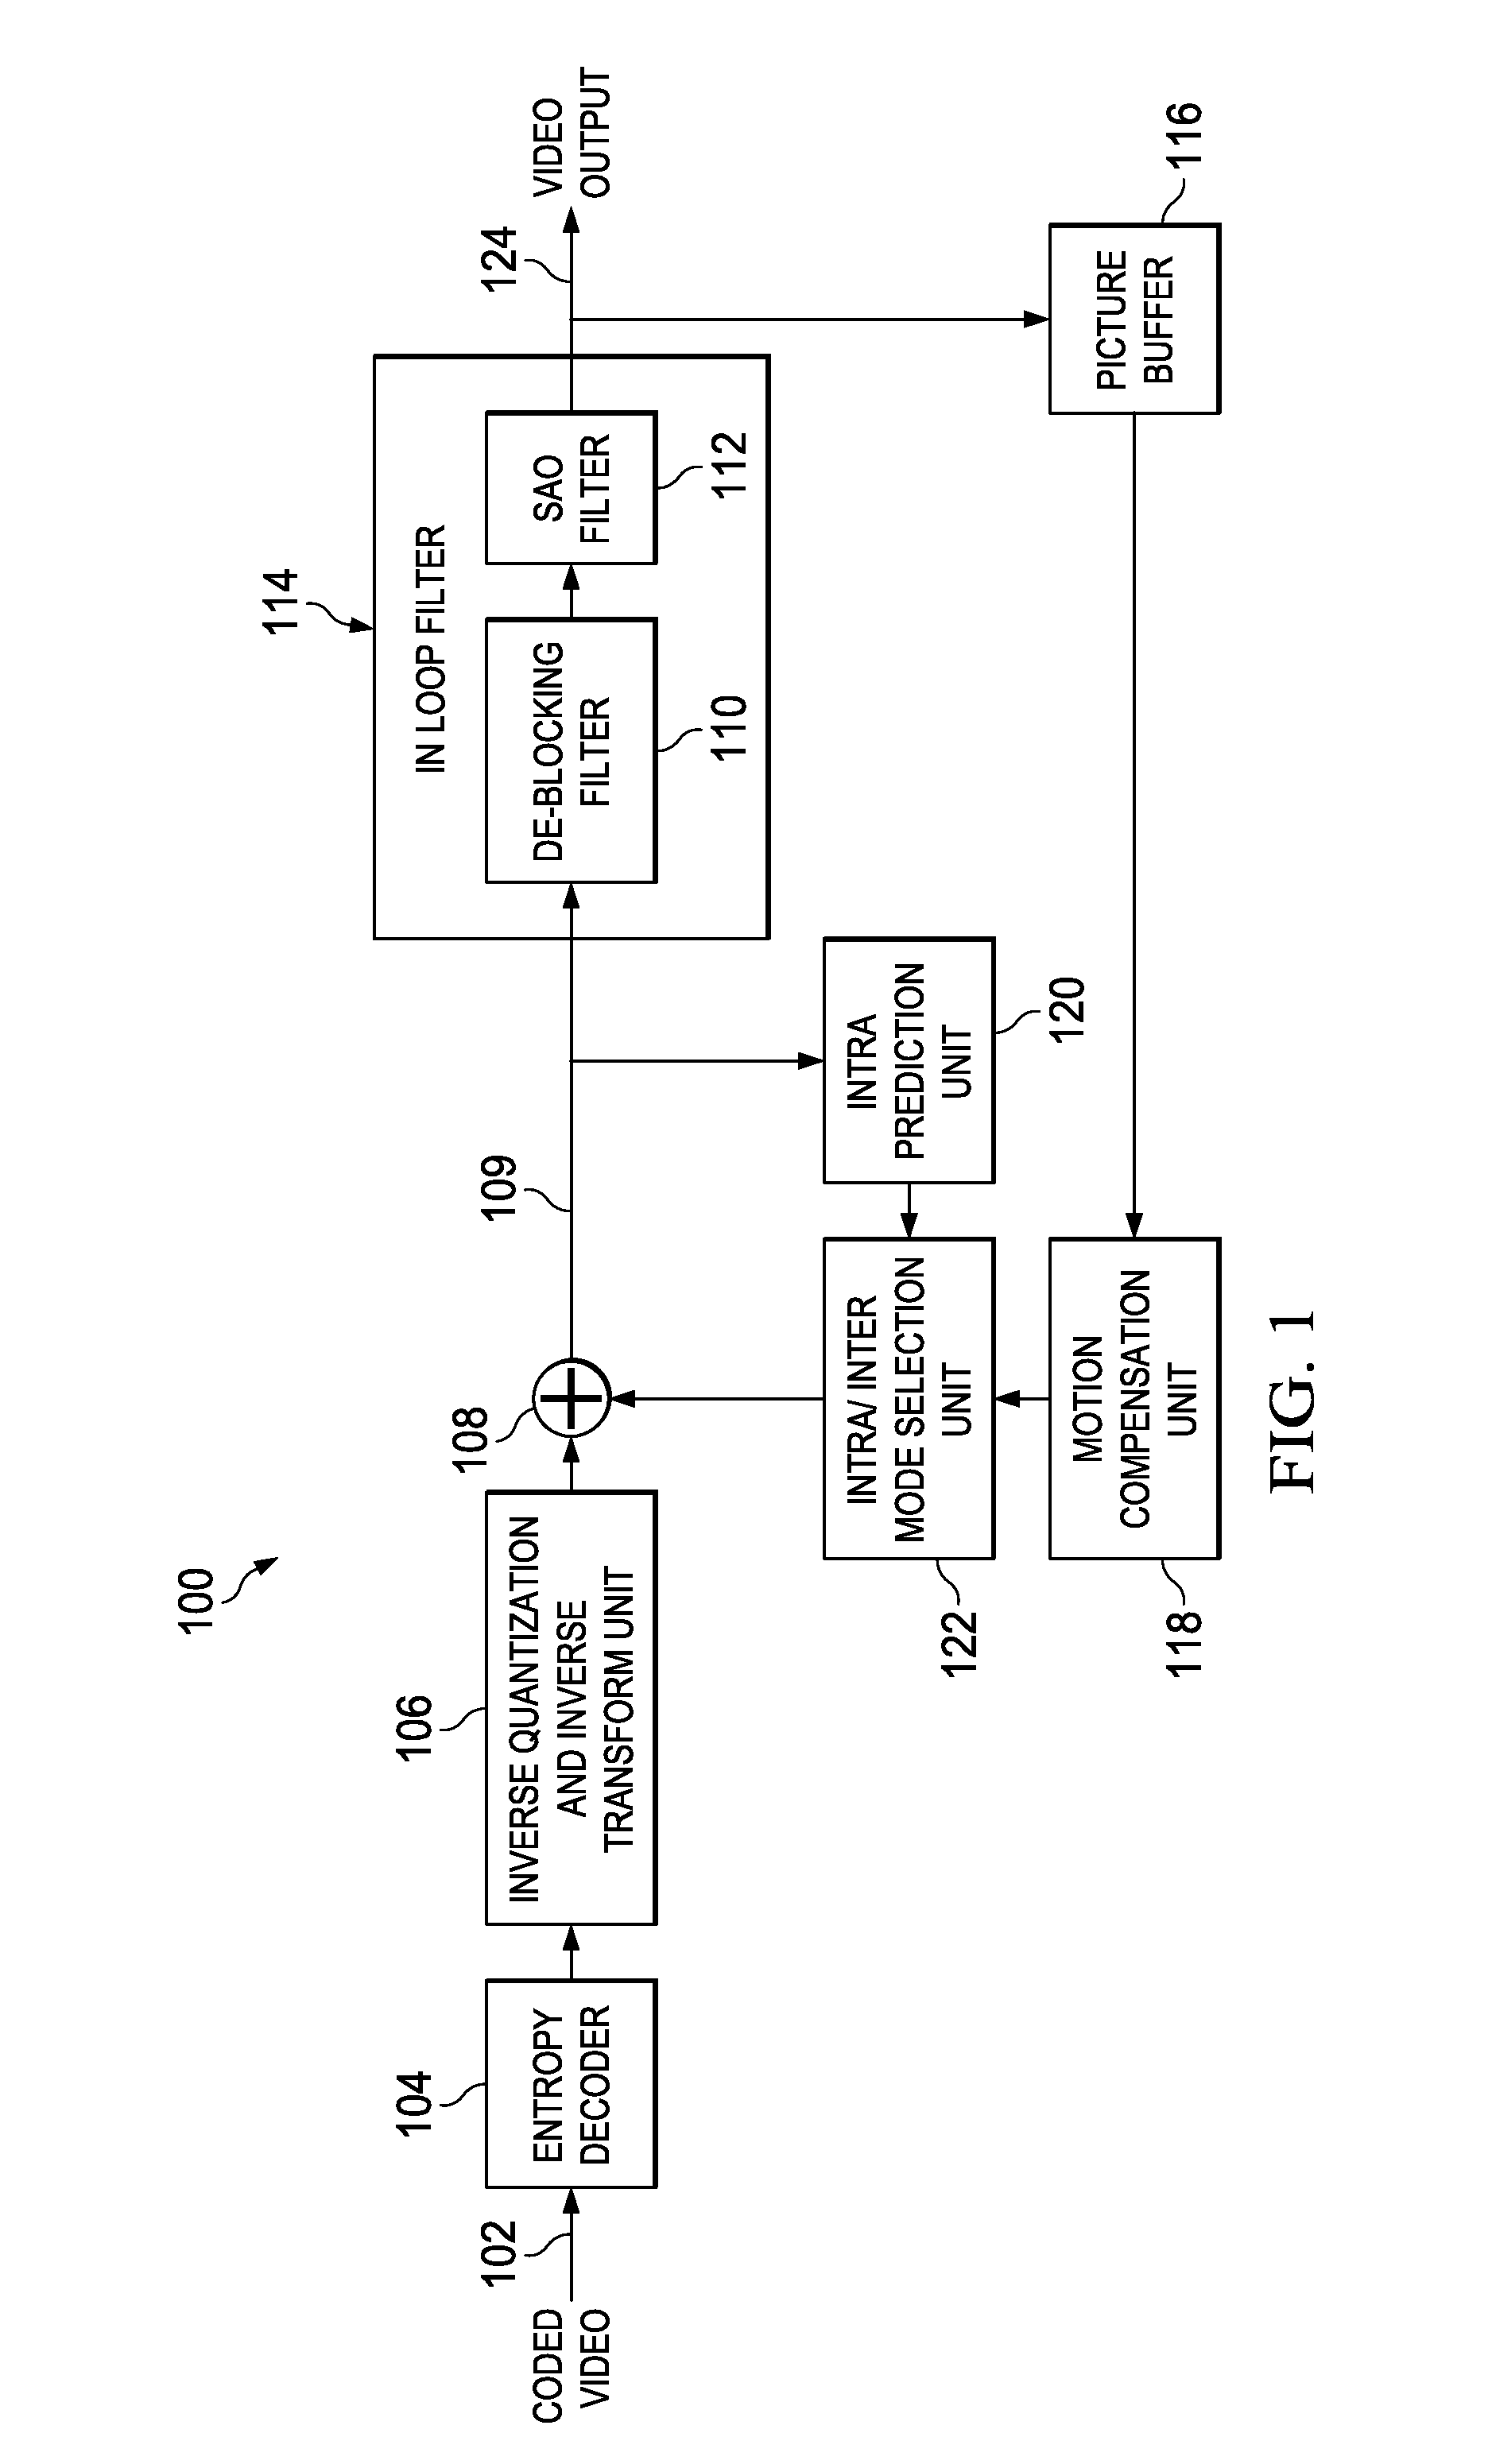 Method and apparatus of hevc de-blocking filter